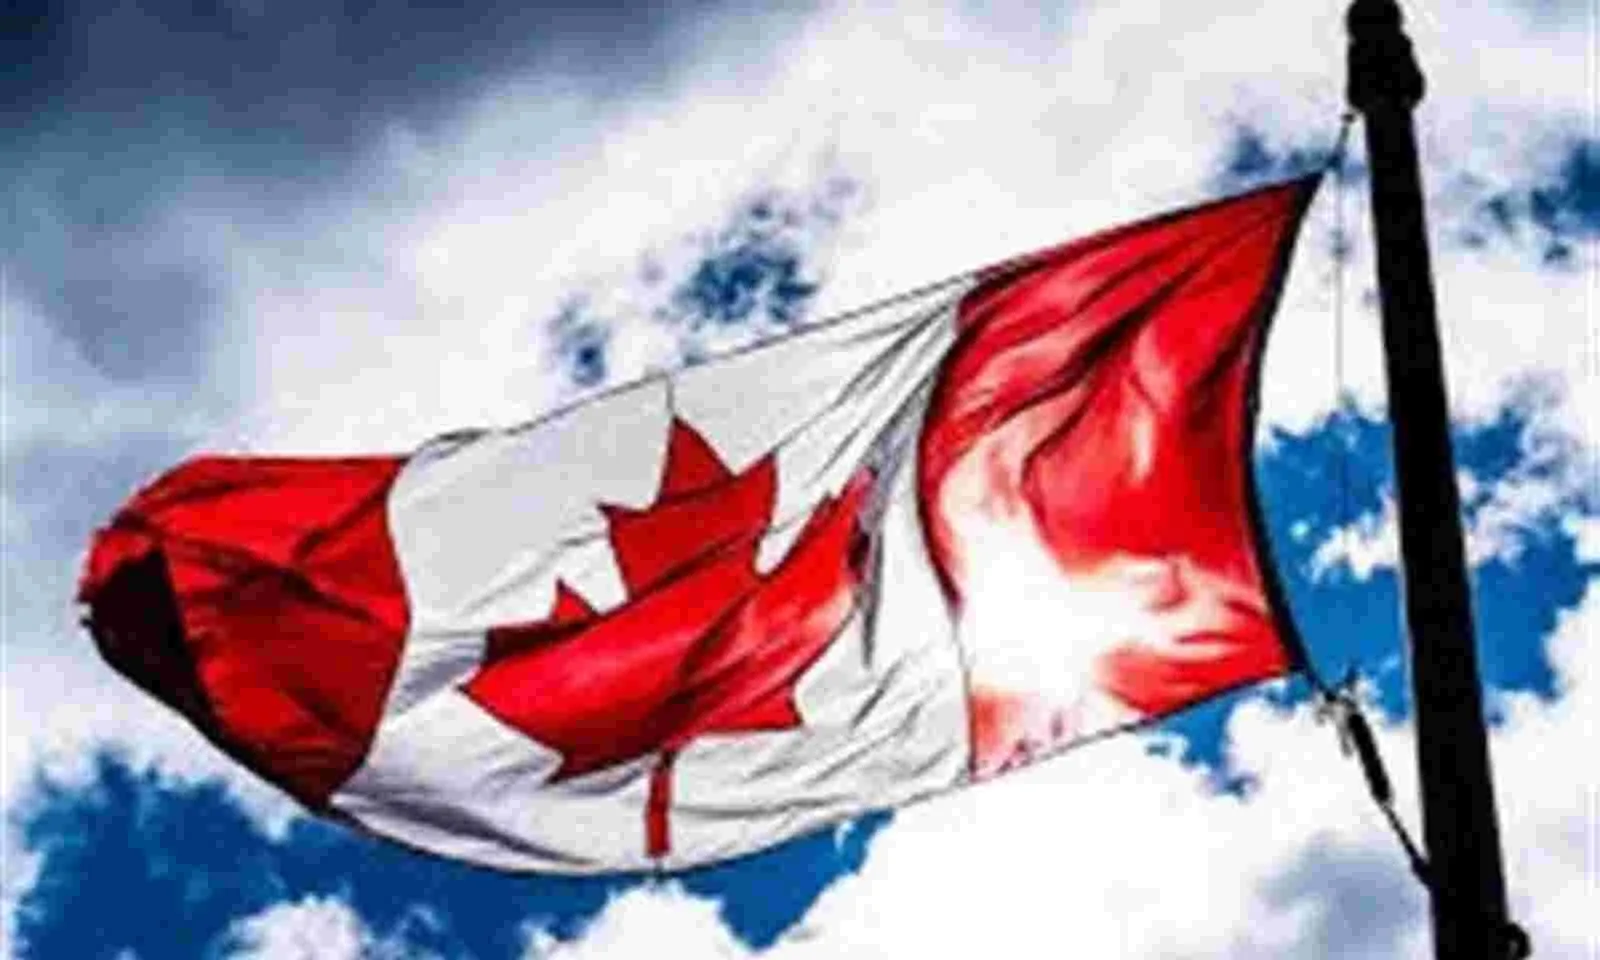 25 Punjabi men held as int'l drug racket busted in Canada - Sentinelassam